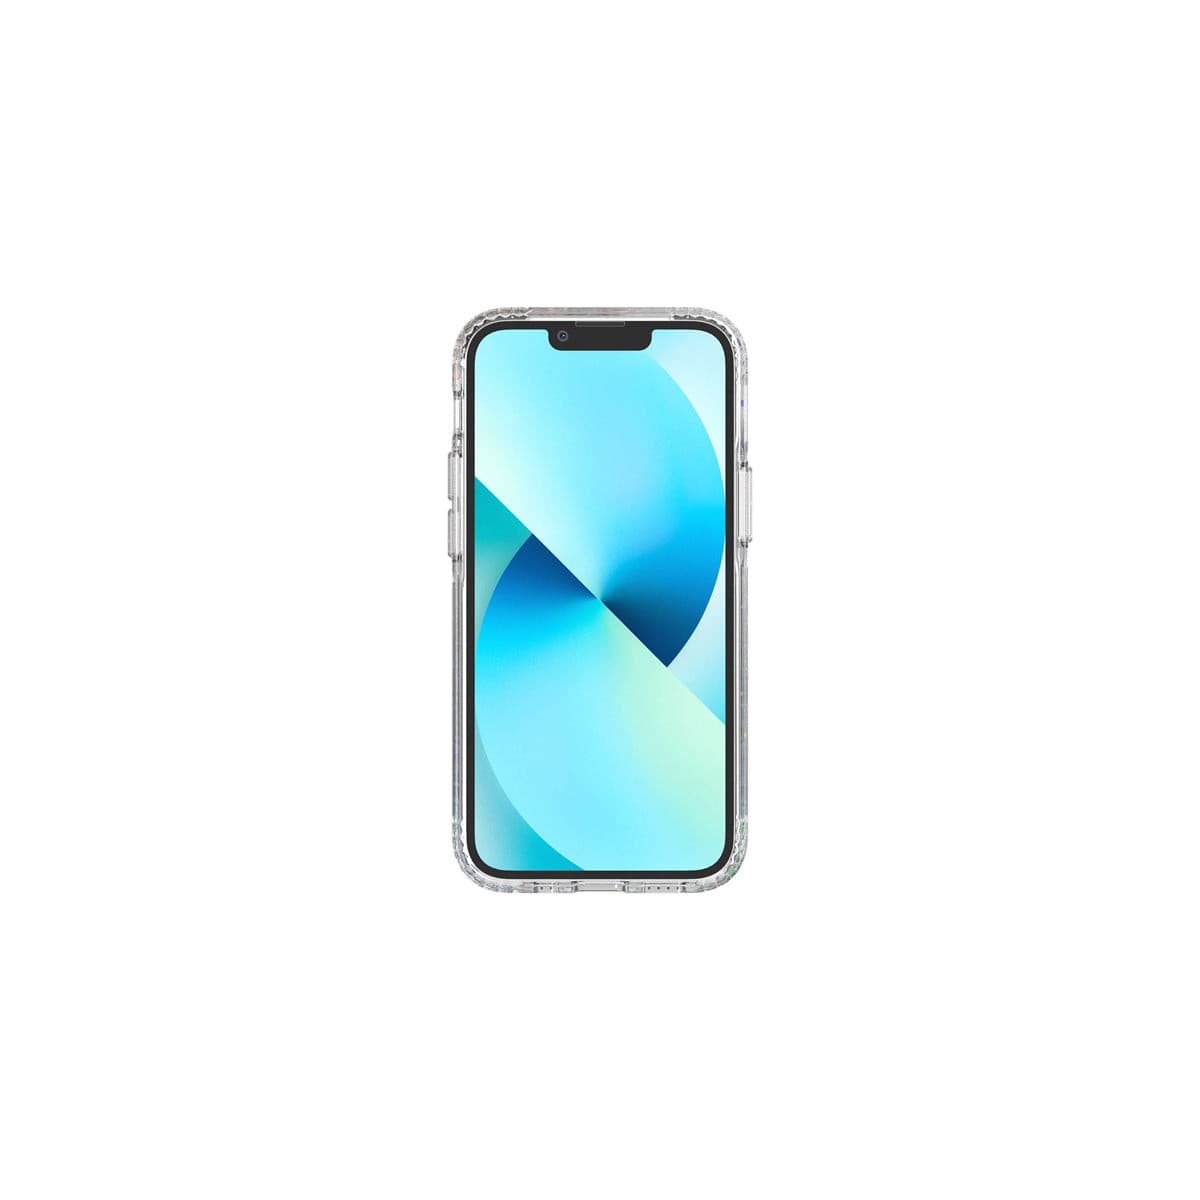 Tech21 Evo Sparkle Phone Case for iPhone 13 mini - Iridescent.